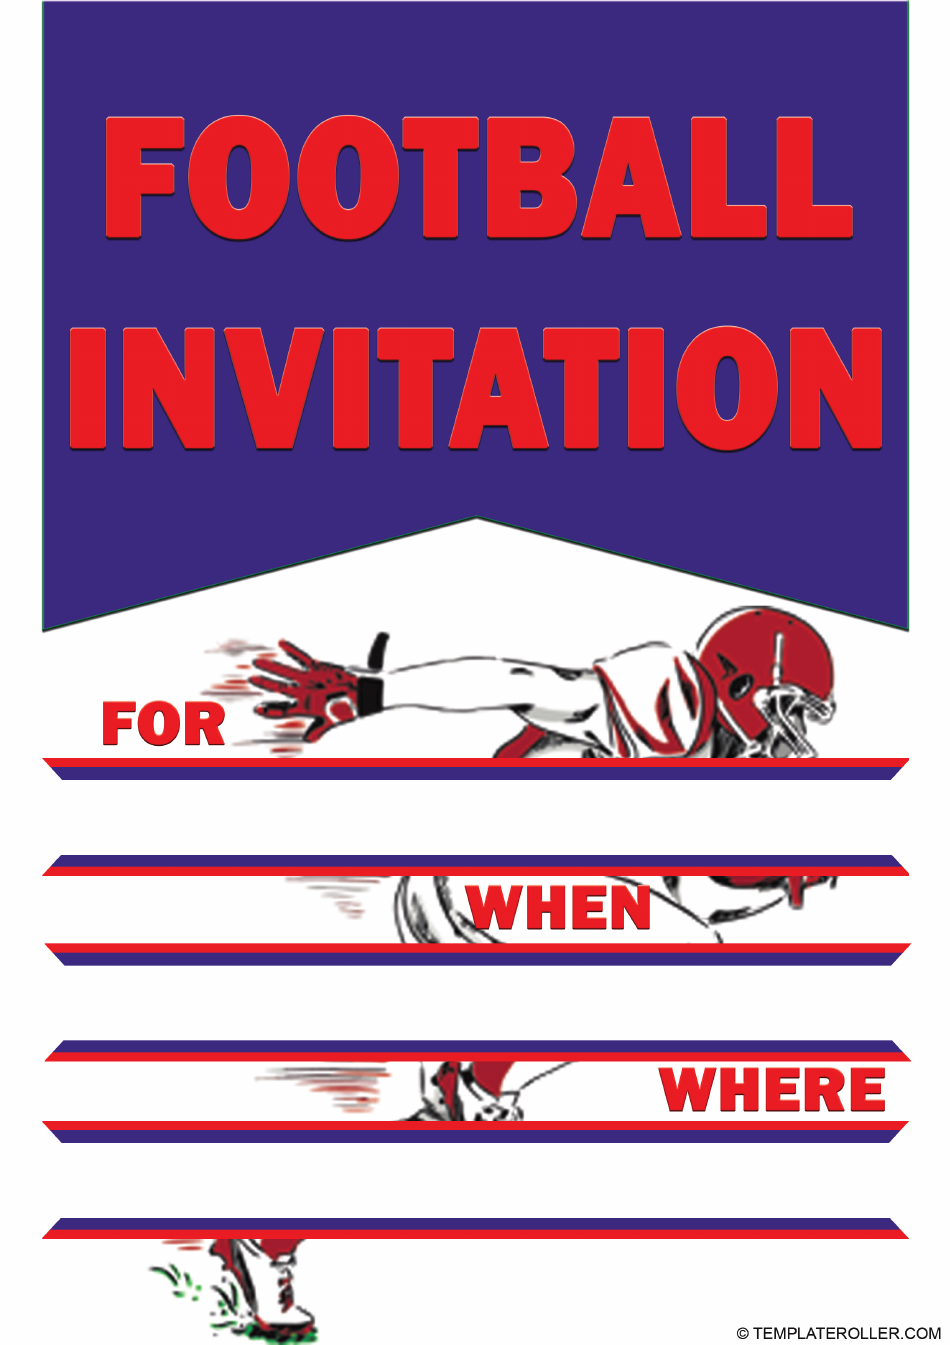 Football Invitation Template - Blue showcases a lively image of a blue-themed invitation template with a football theme.